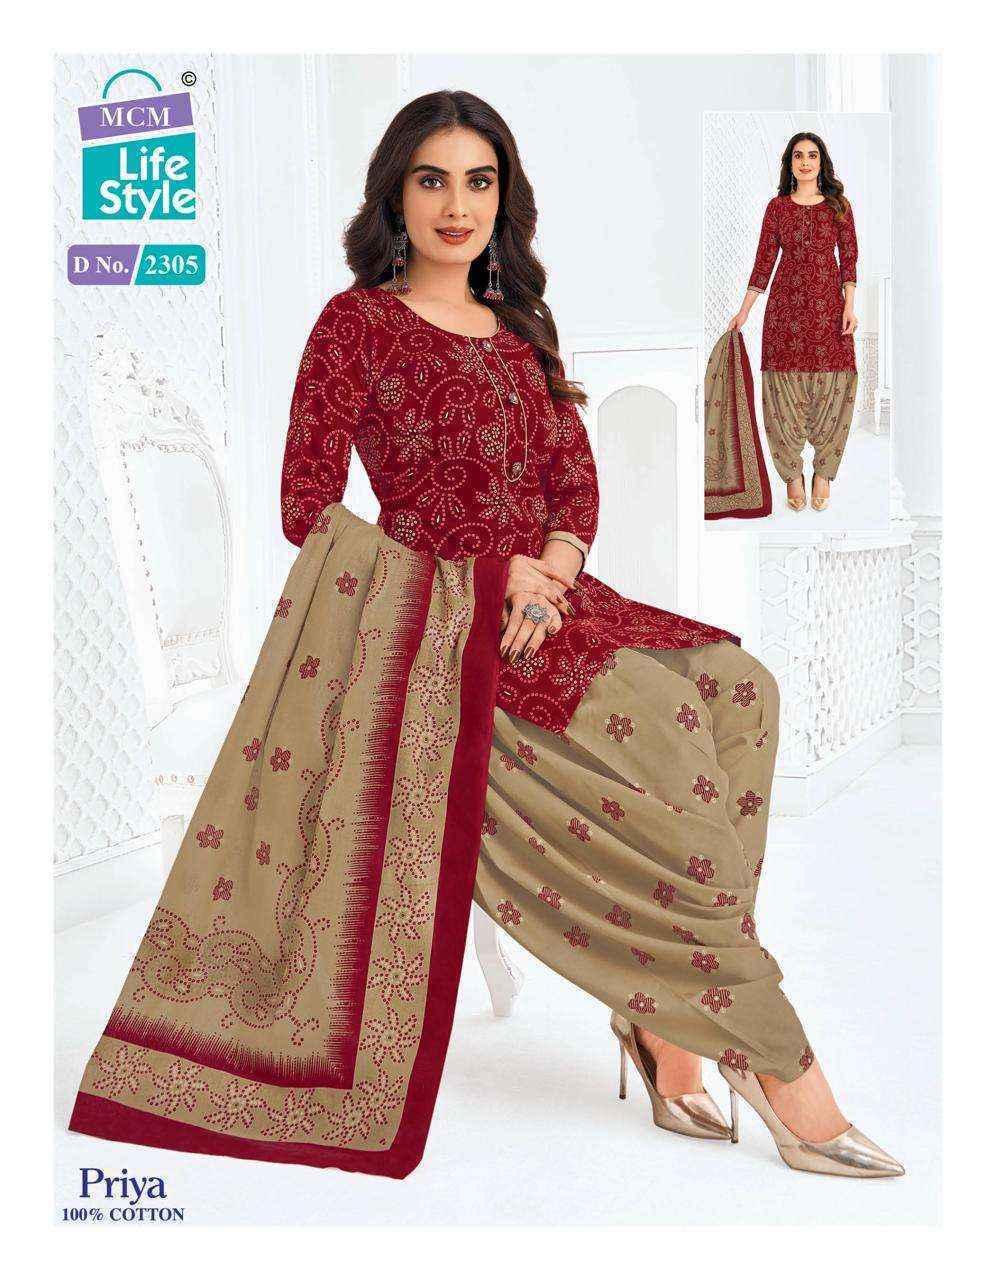 MCM Lifestyle Priya Vol 23 Cambric Cotton Dress Material 36 pcs Catalogue